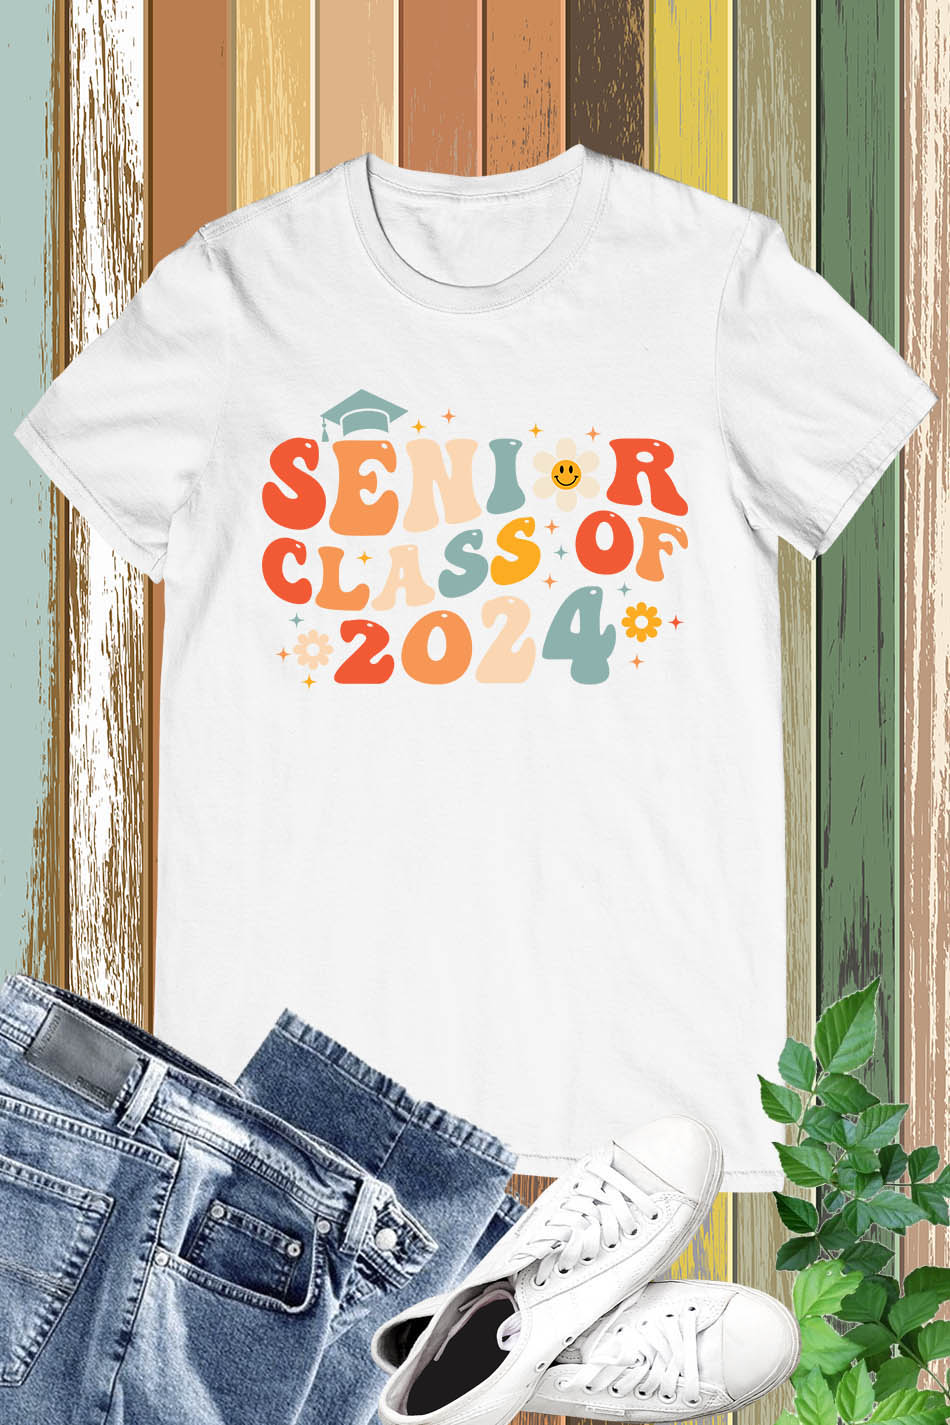 Senior Class of 2024 Graduation Shirt